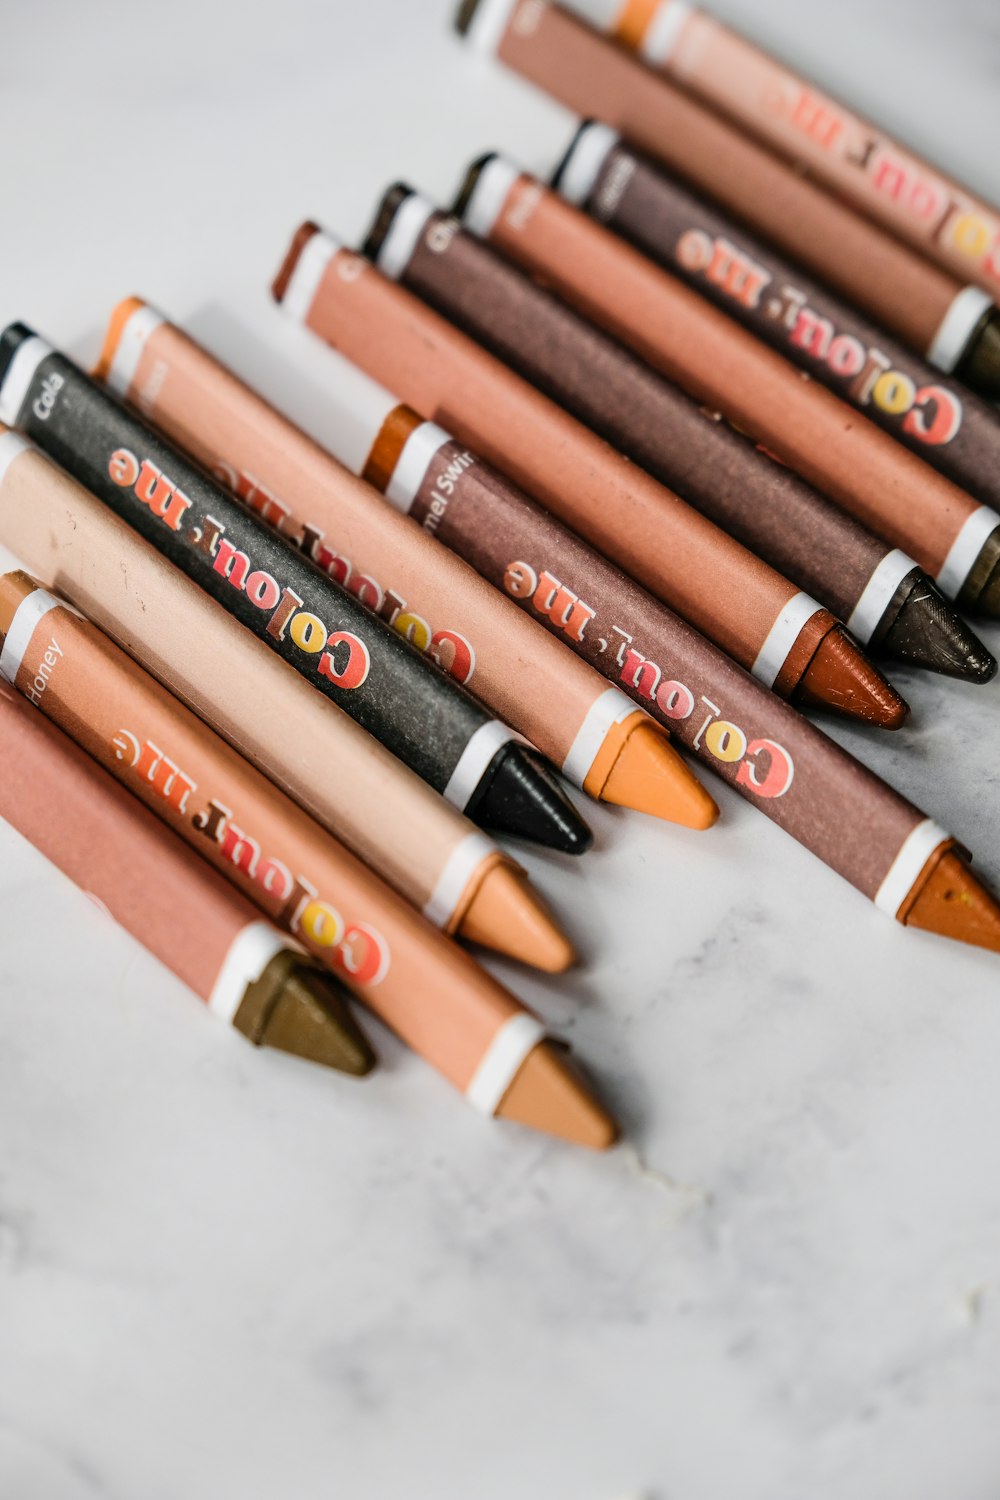 orange and black coloring pencils